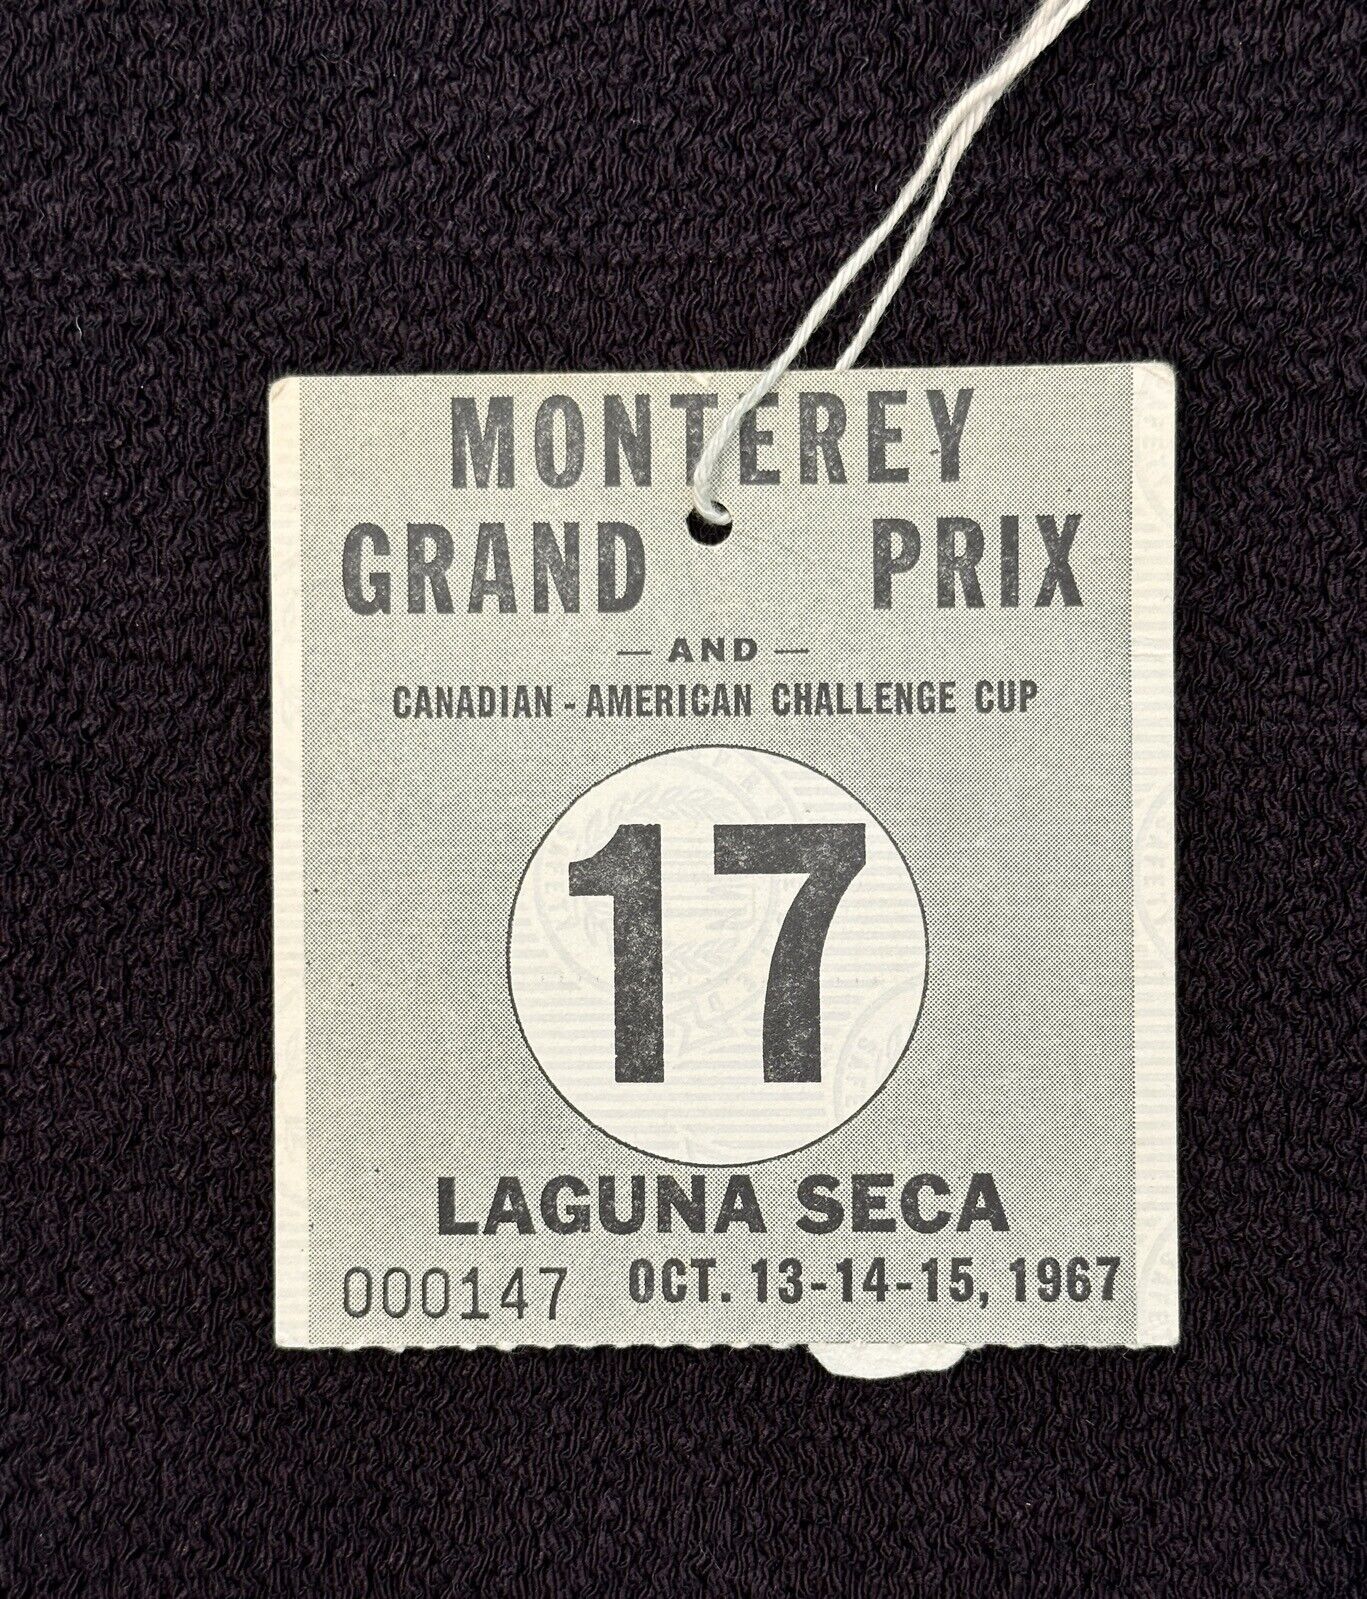 1967 Monterey Grand Prix Ticket Can-Am Challenge Cup Laguna Seca Bruce McLaren